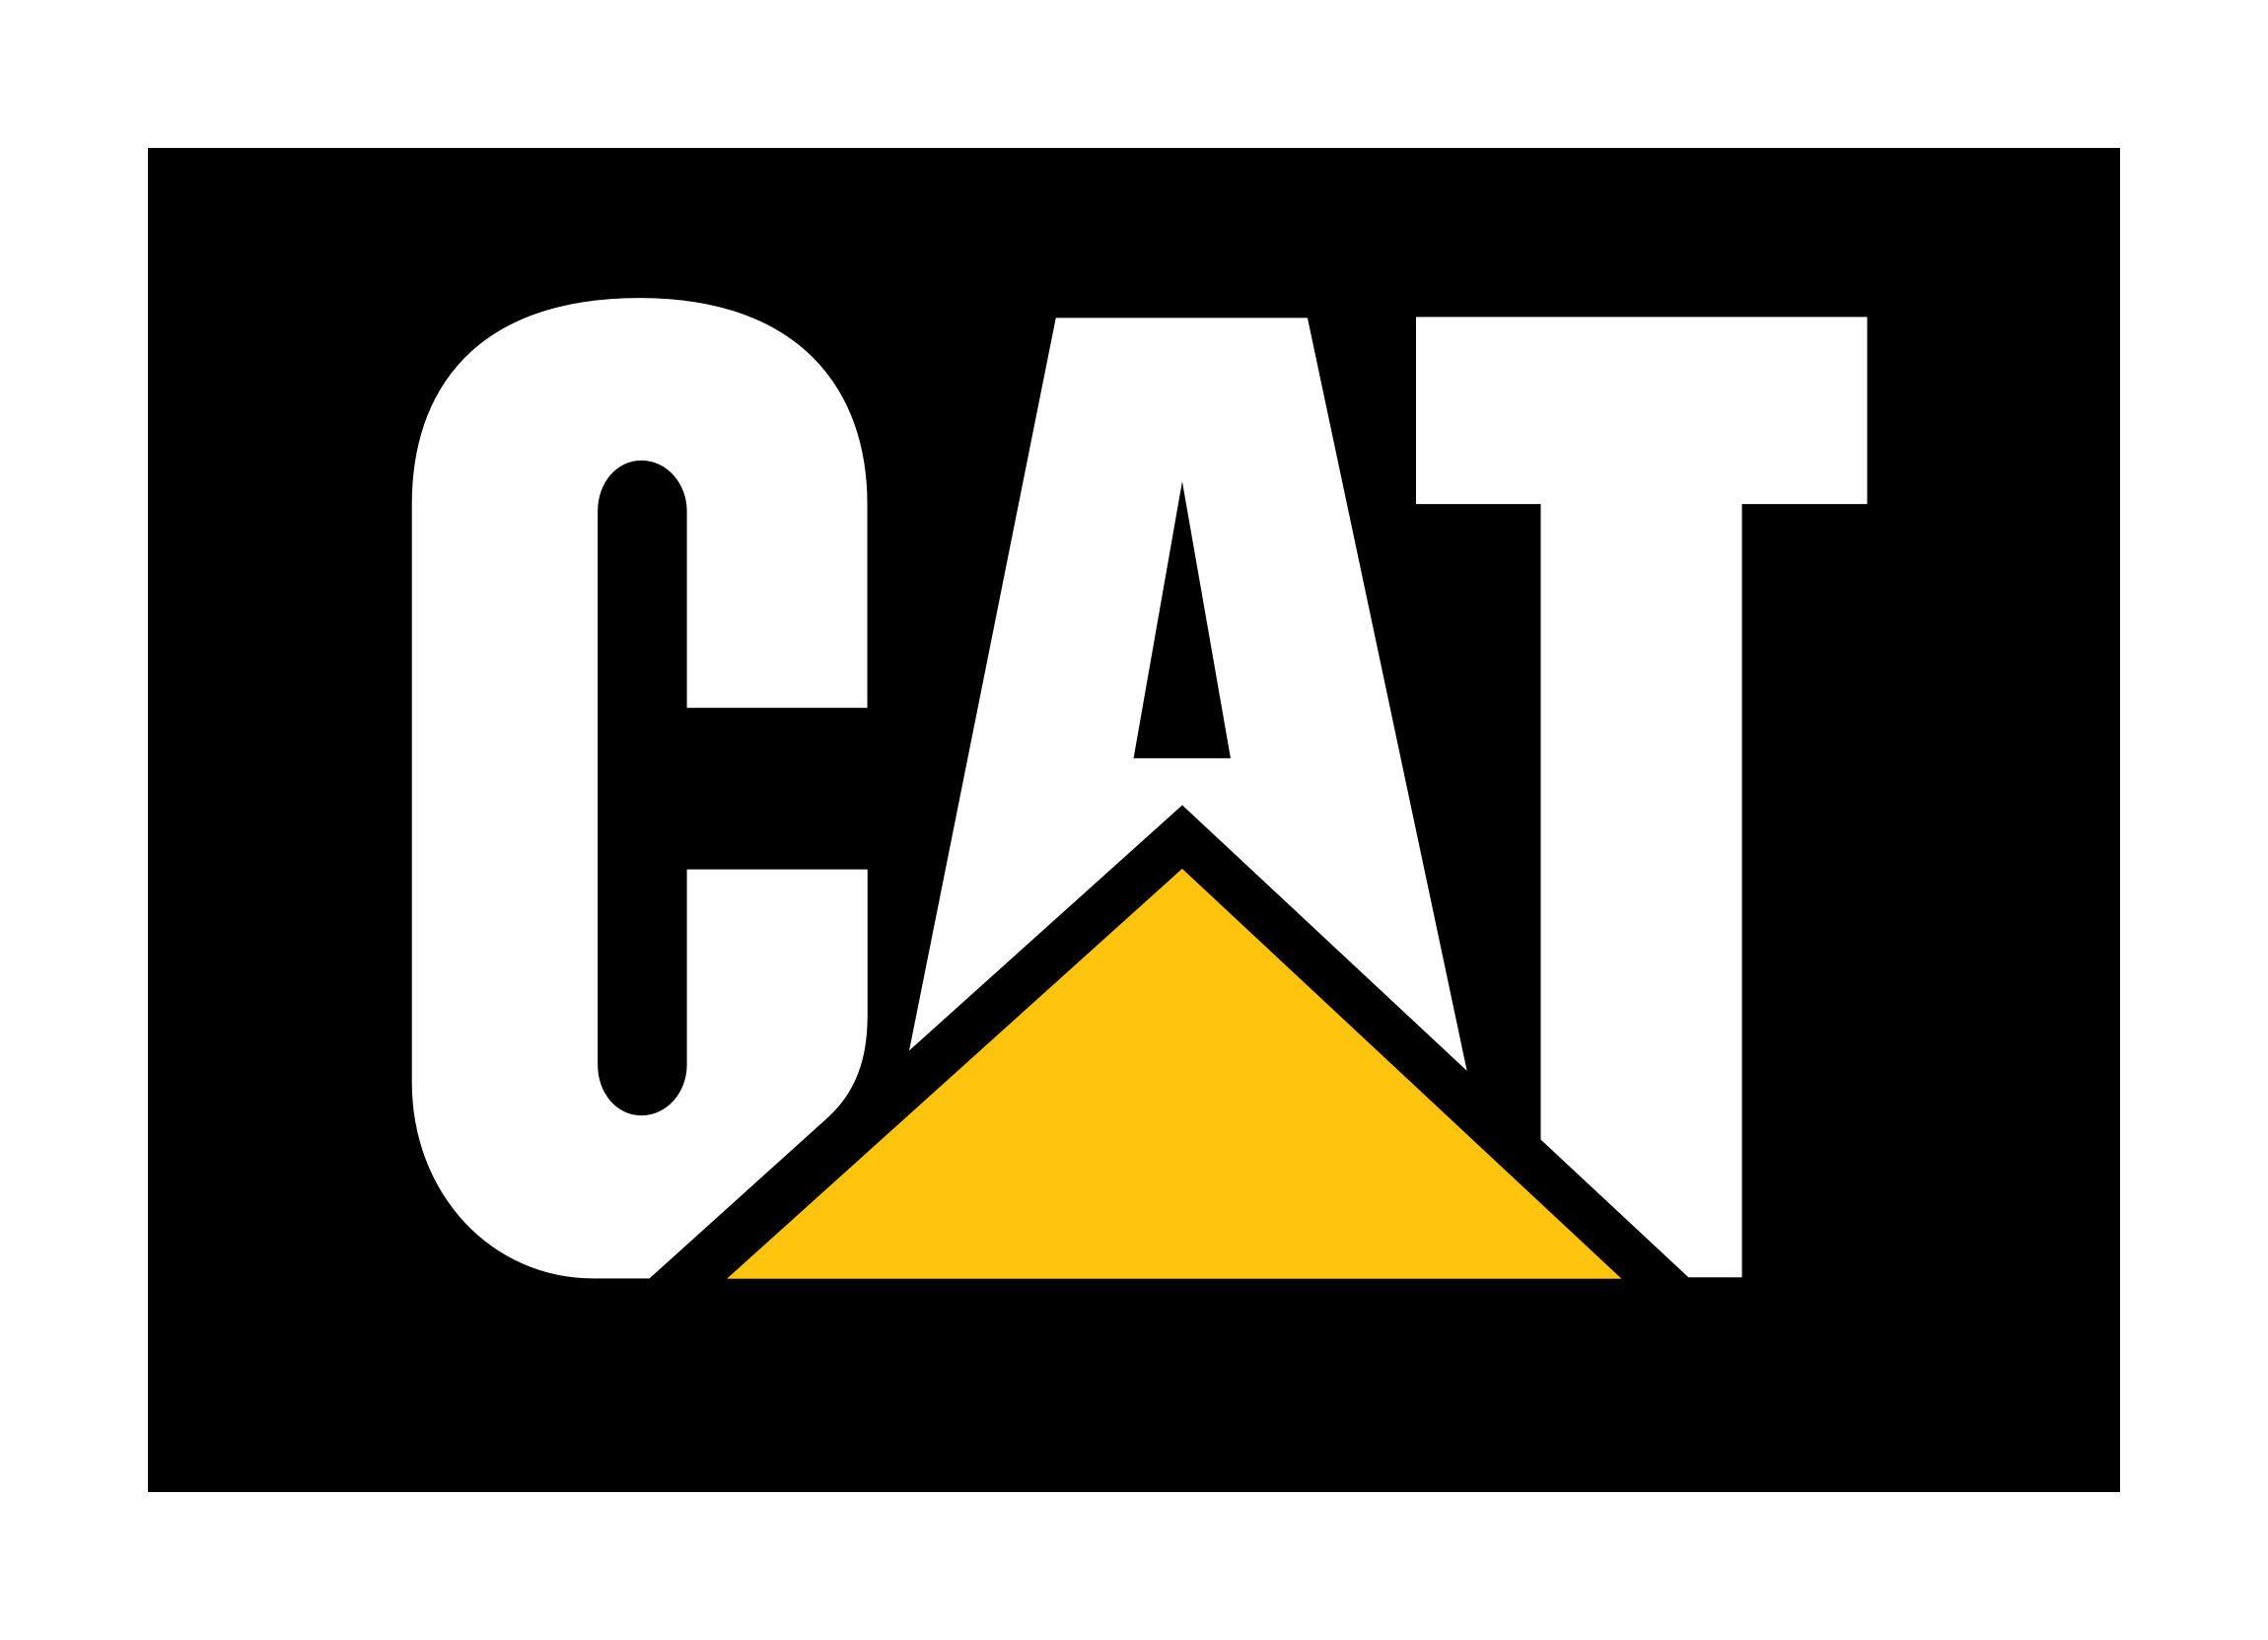 Yellow Triangle Company Logo - Caterpillar Logo, Caterprillar Symbol Meaning, History and Evolution